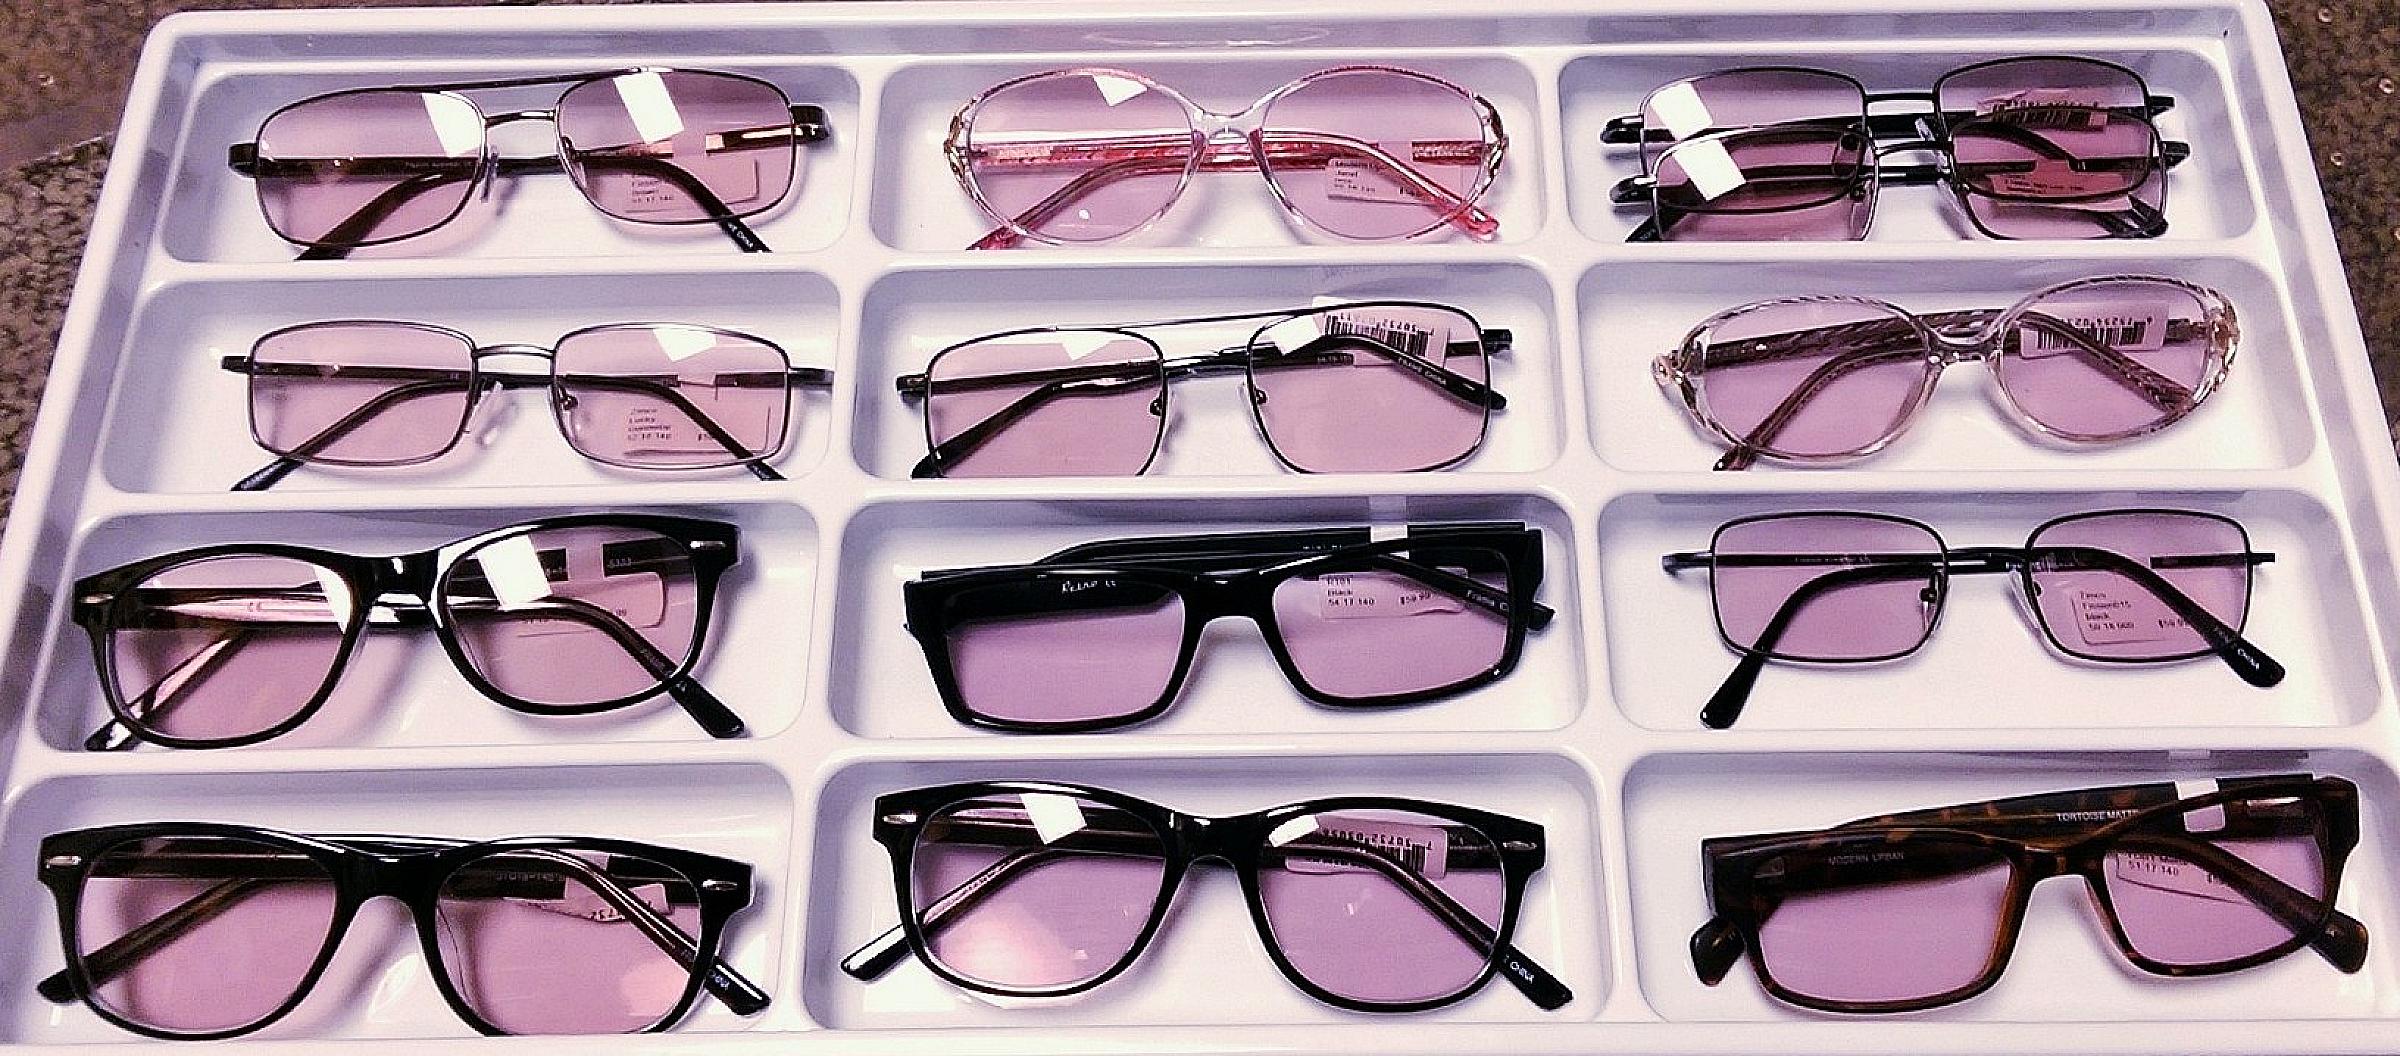 A sample of FL-41 eyeglasses.